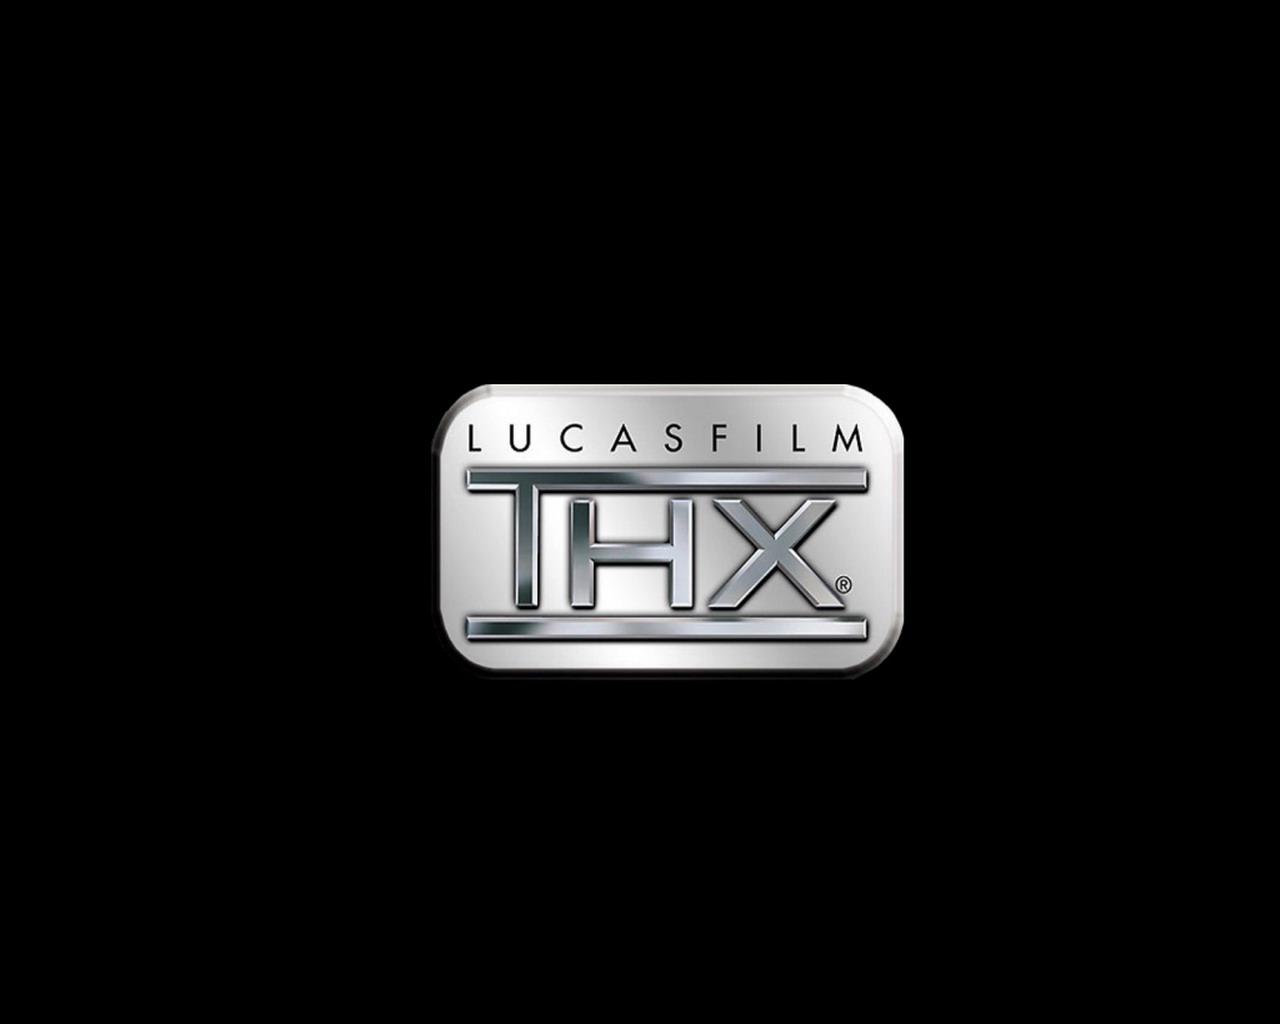 THX Logo Wallpaper